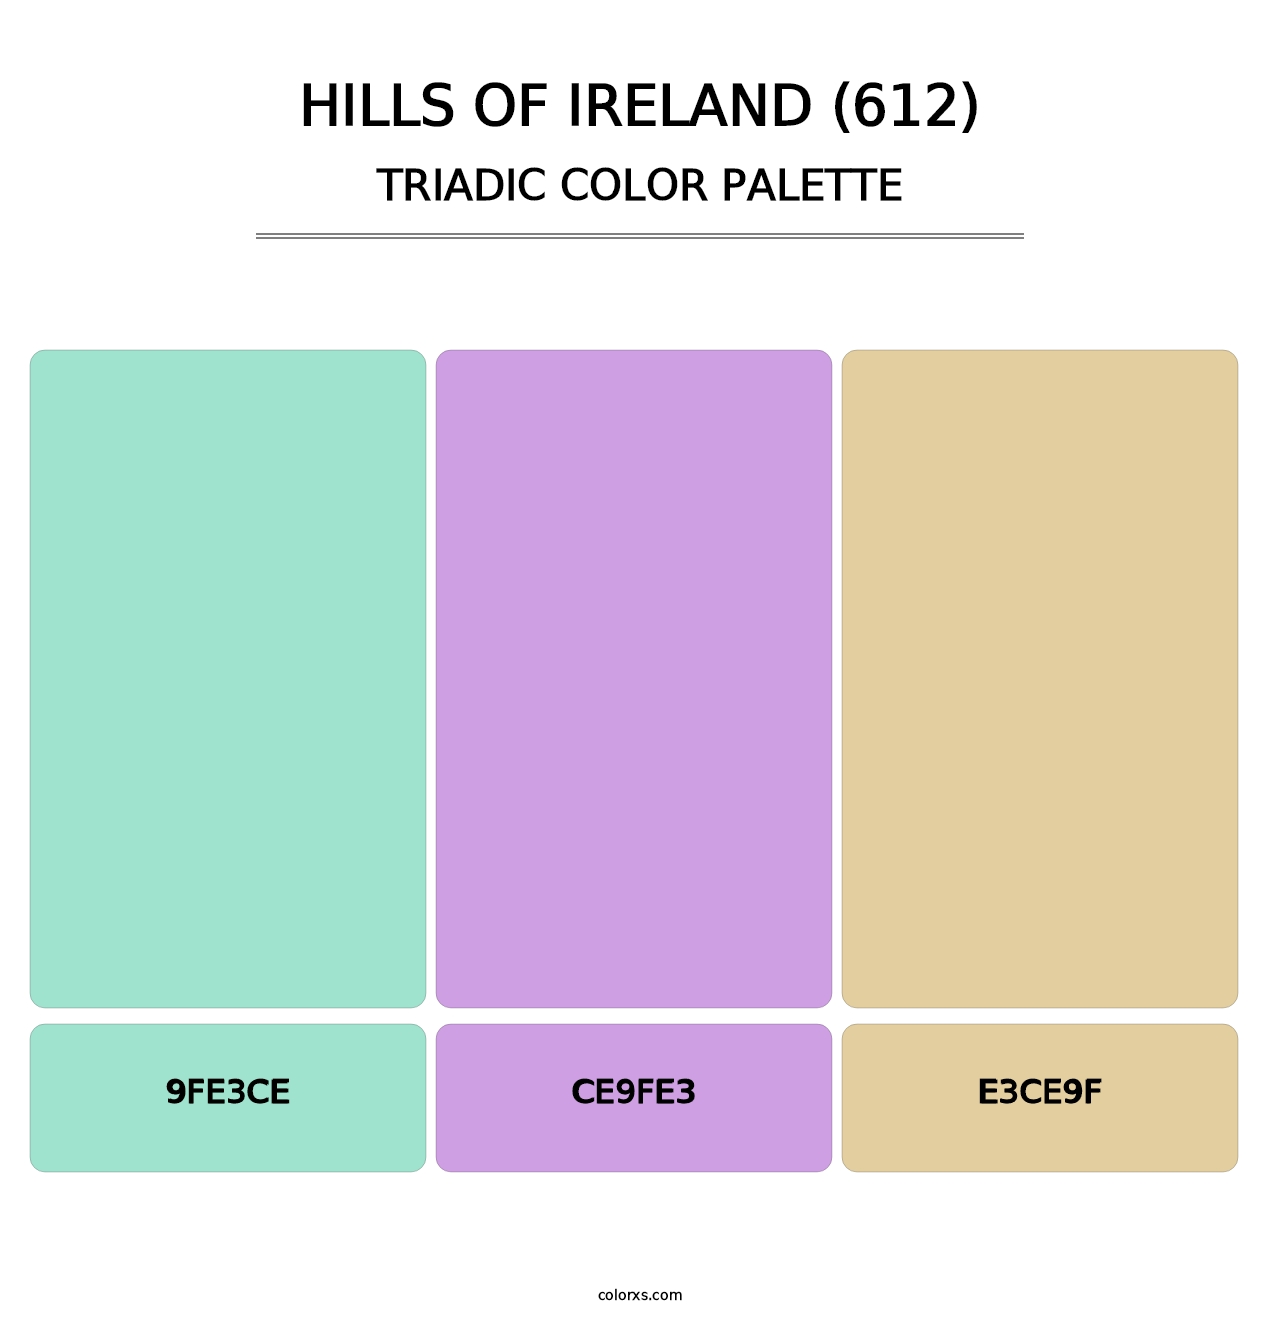 Hills of Ireland (612) - Triadic Color Palette